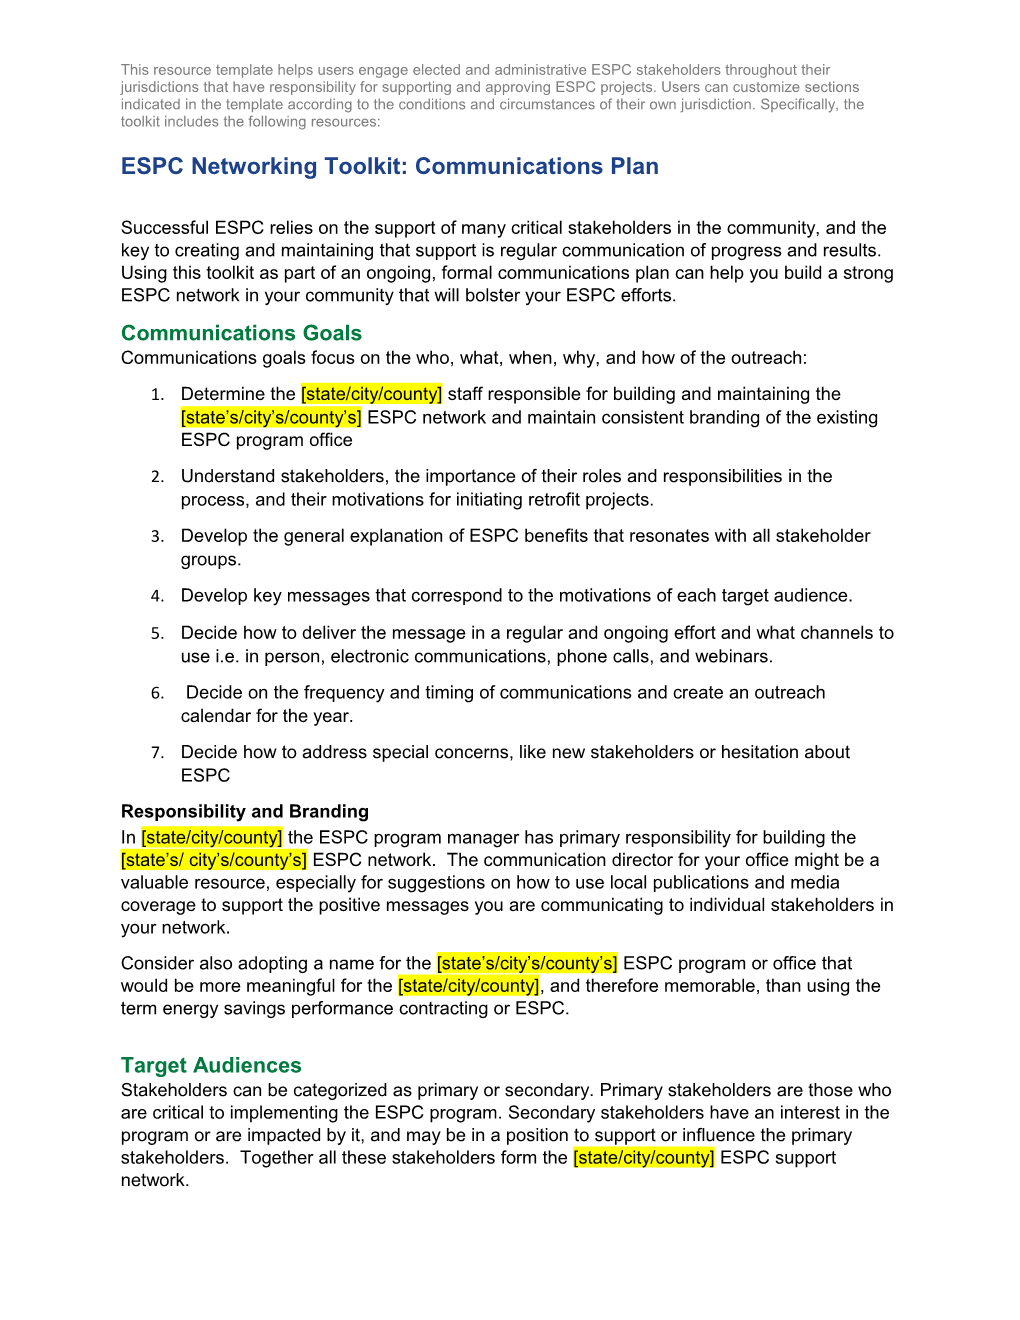 ESPC Networking Toolkit:Communications Plan